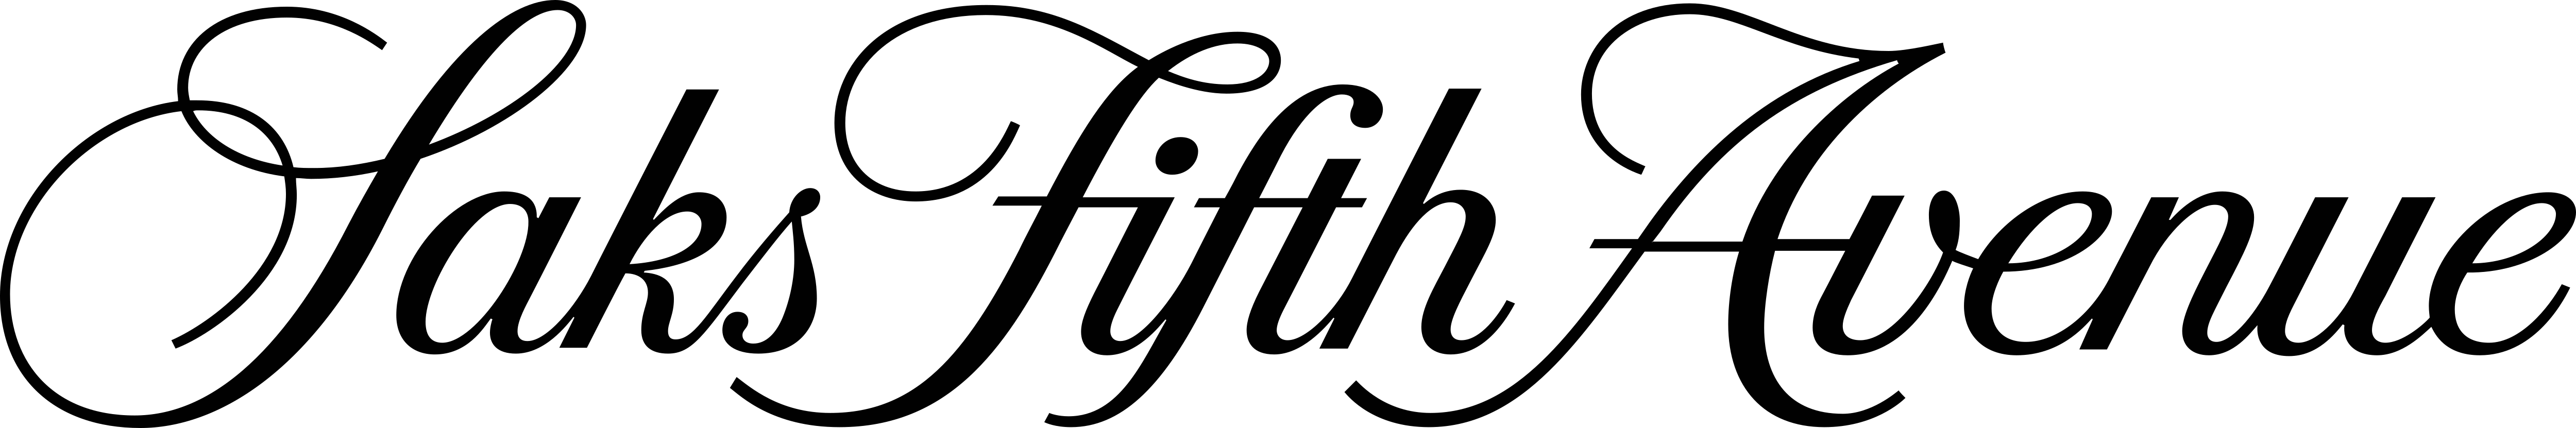 Saks Fifth Avenue Logo 